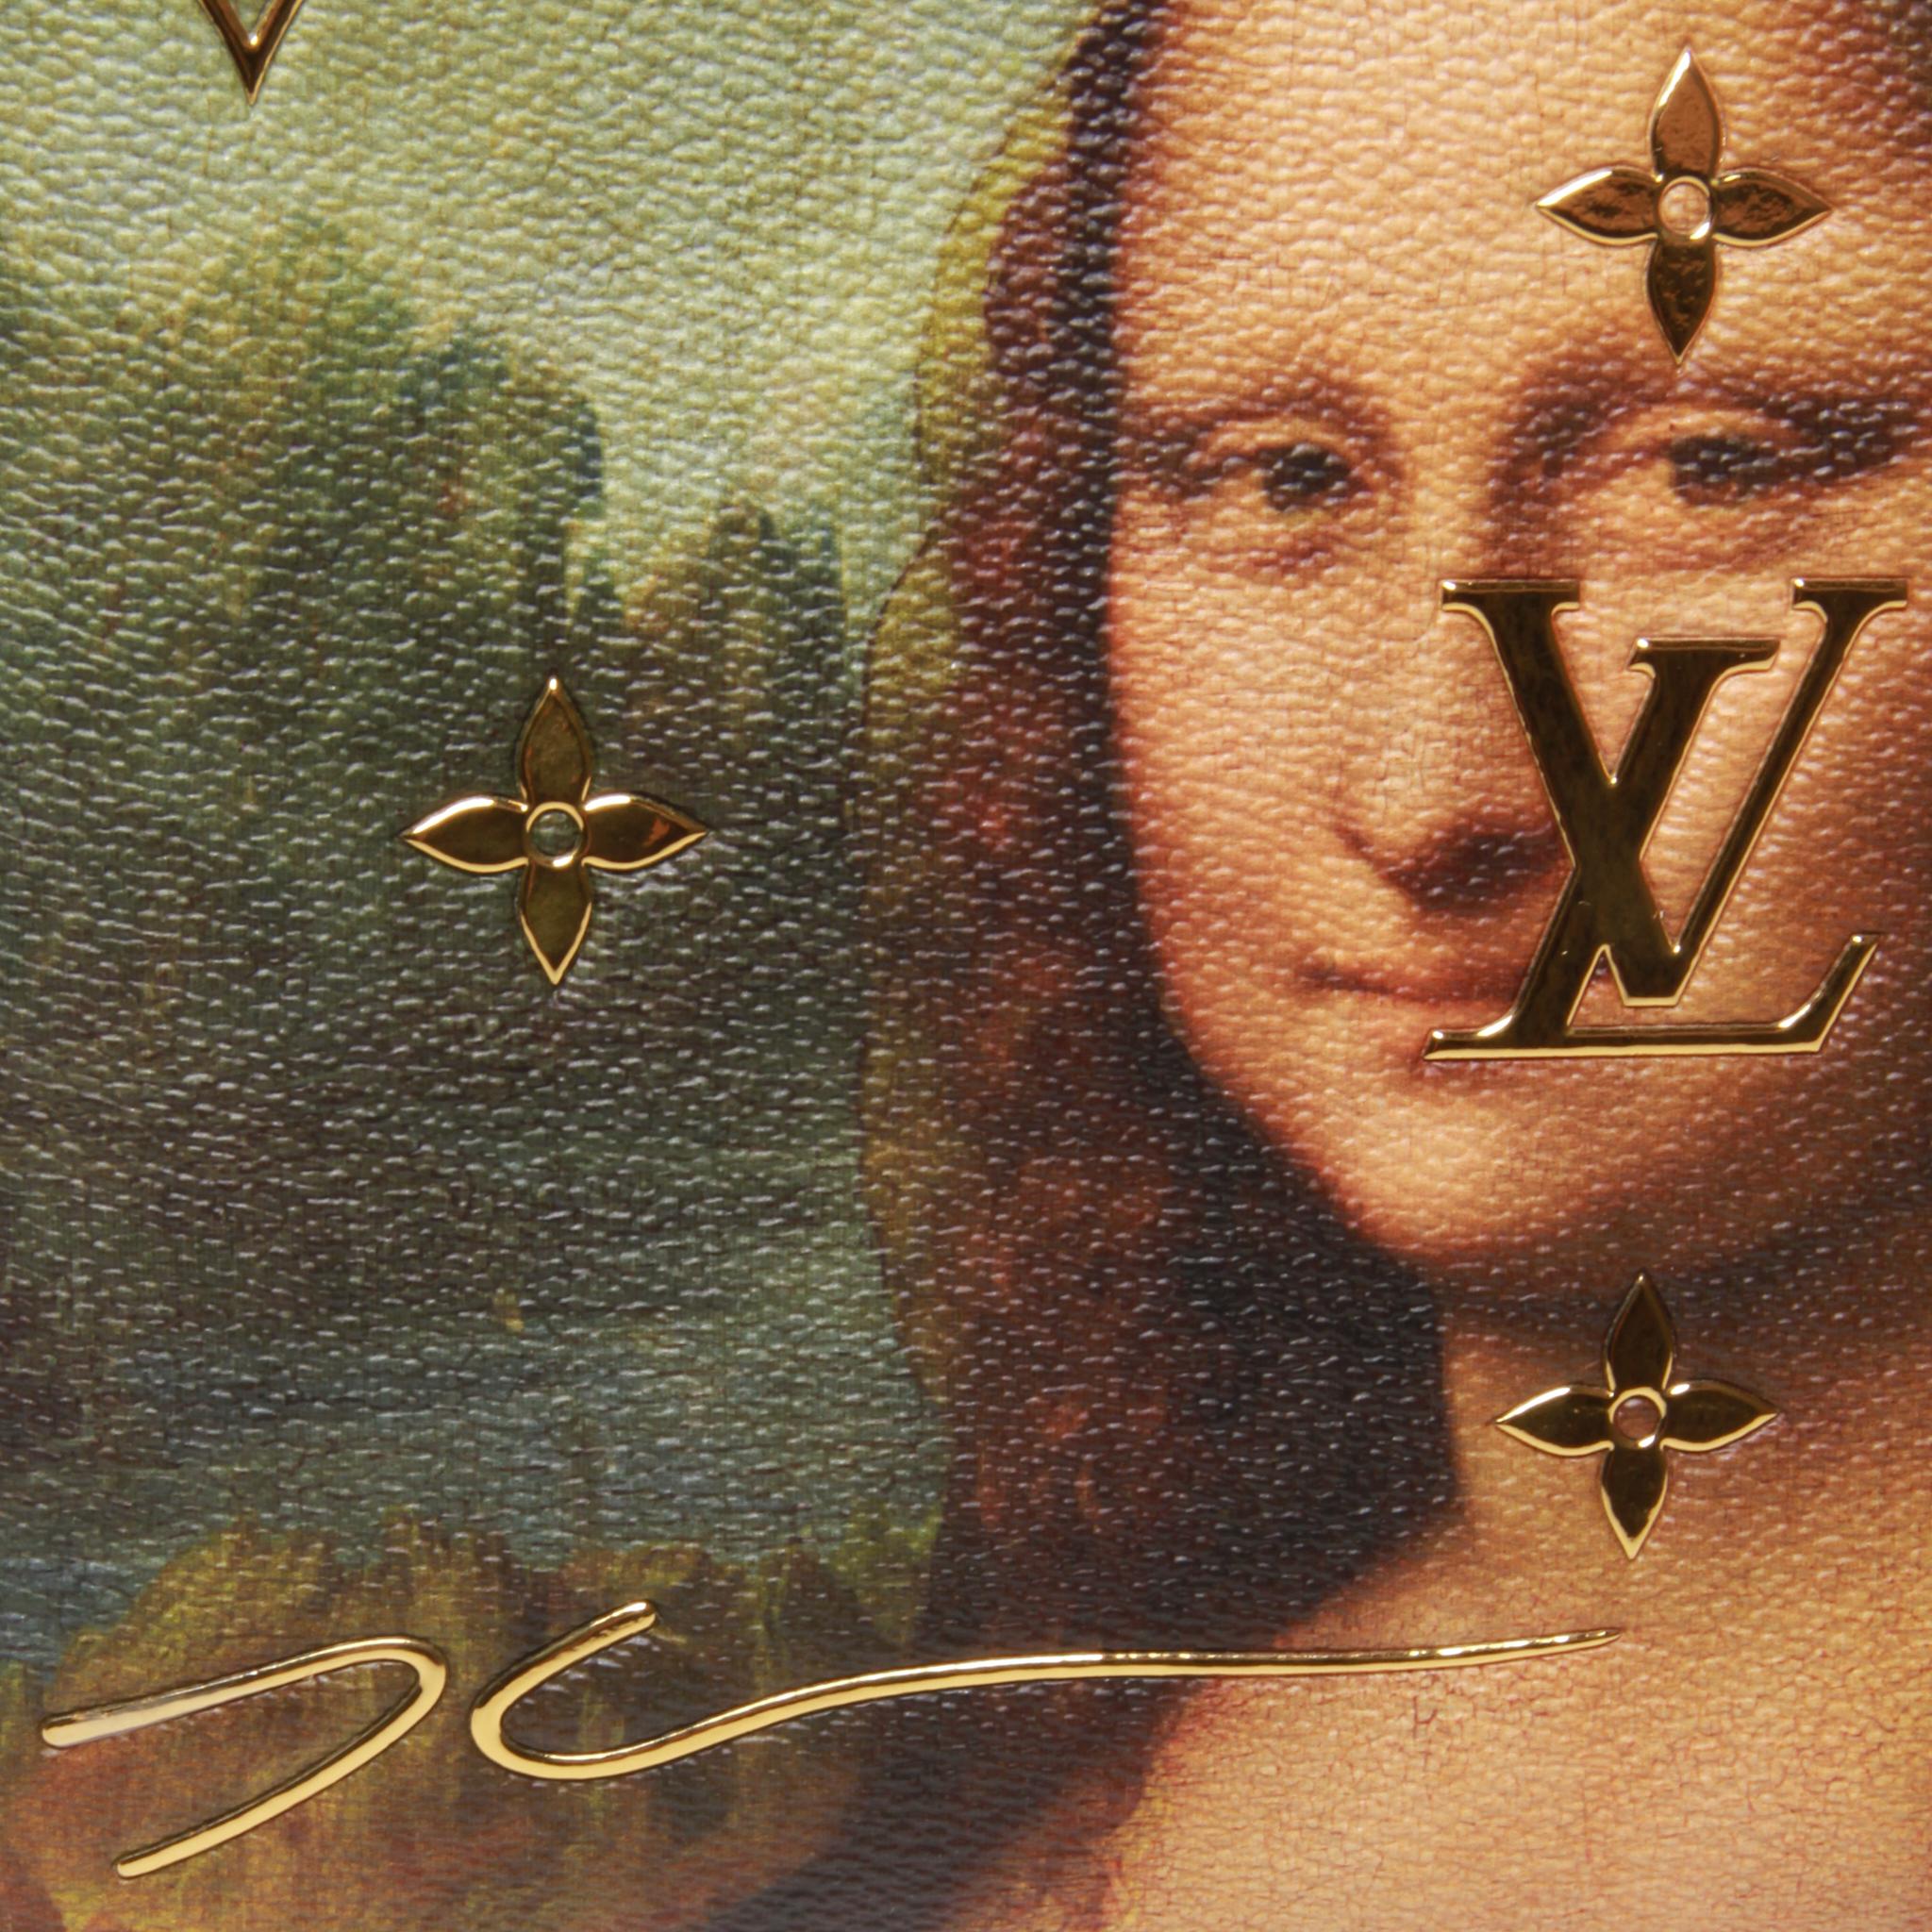 LV Jeff Koons Da Vinchi, Mona Lisa portrait wallet with authentic box in excellent condition